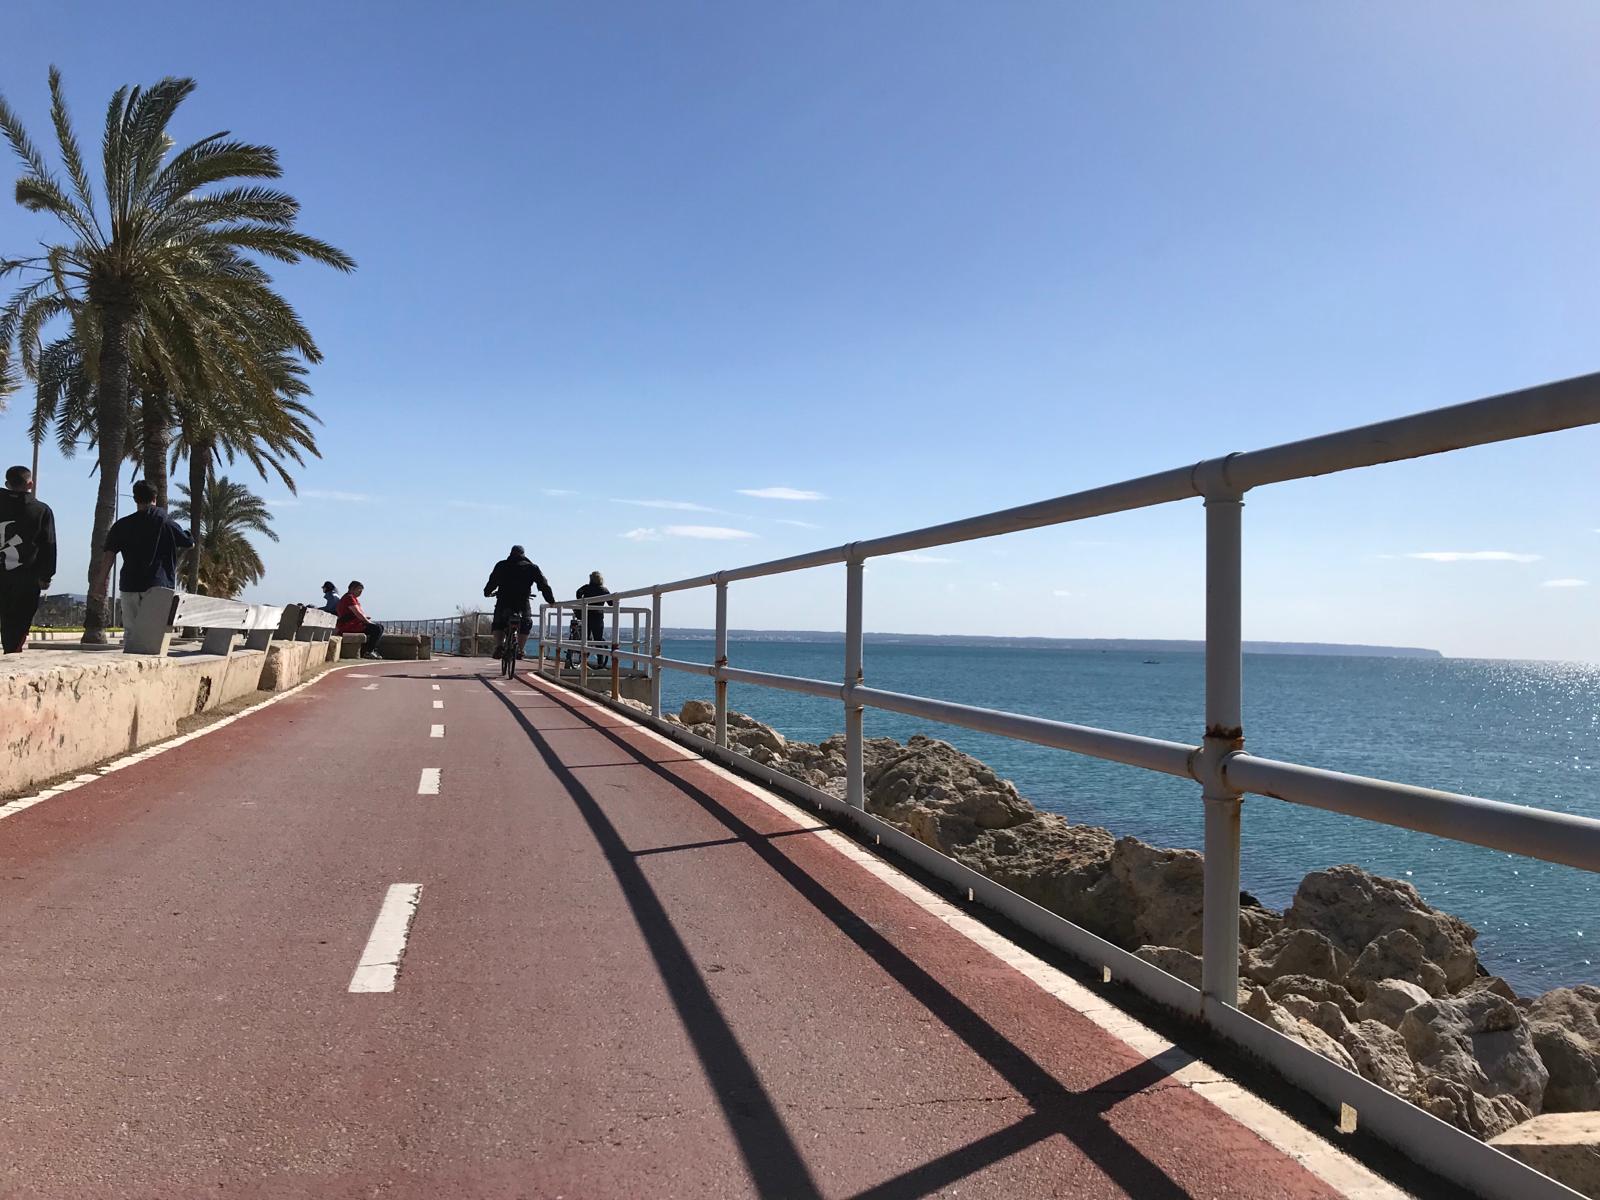 The APB improves Avenida Adolfo Suárez's cycle lane in the port of Palma